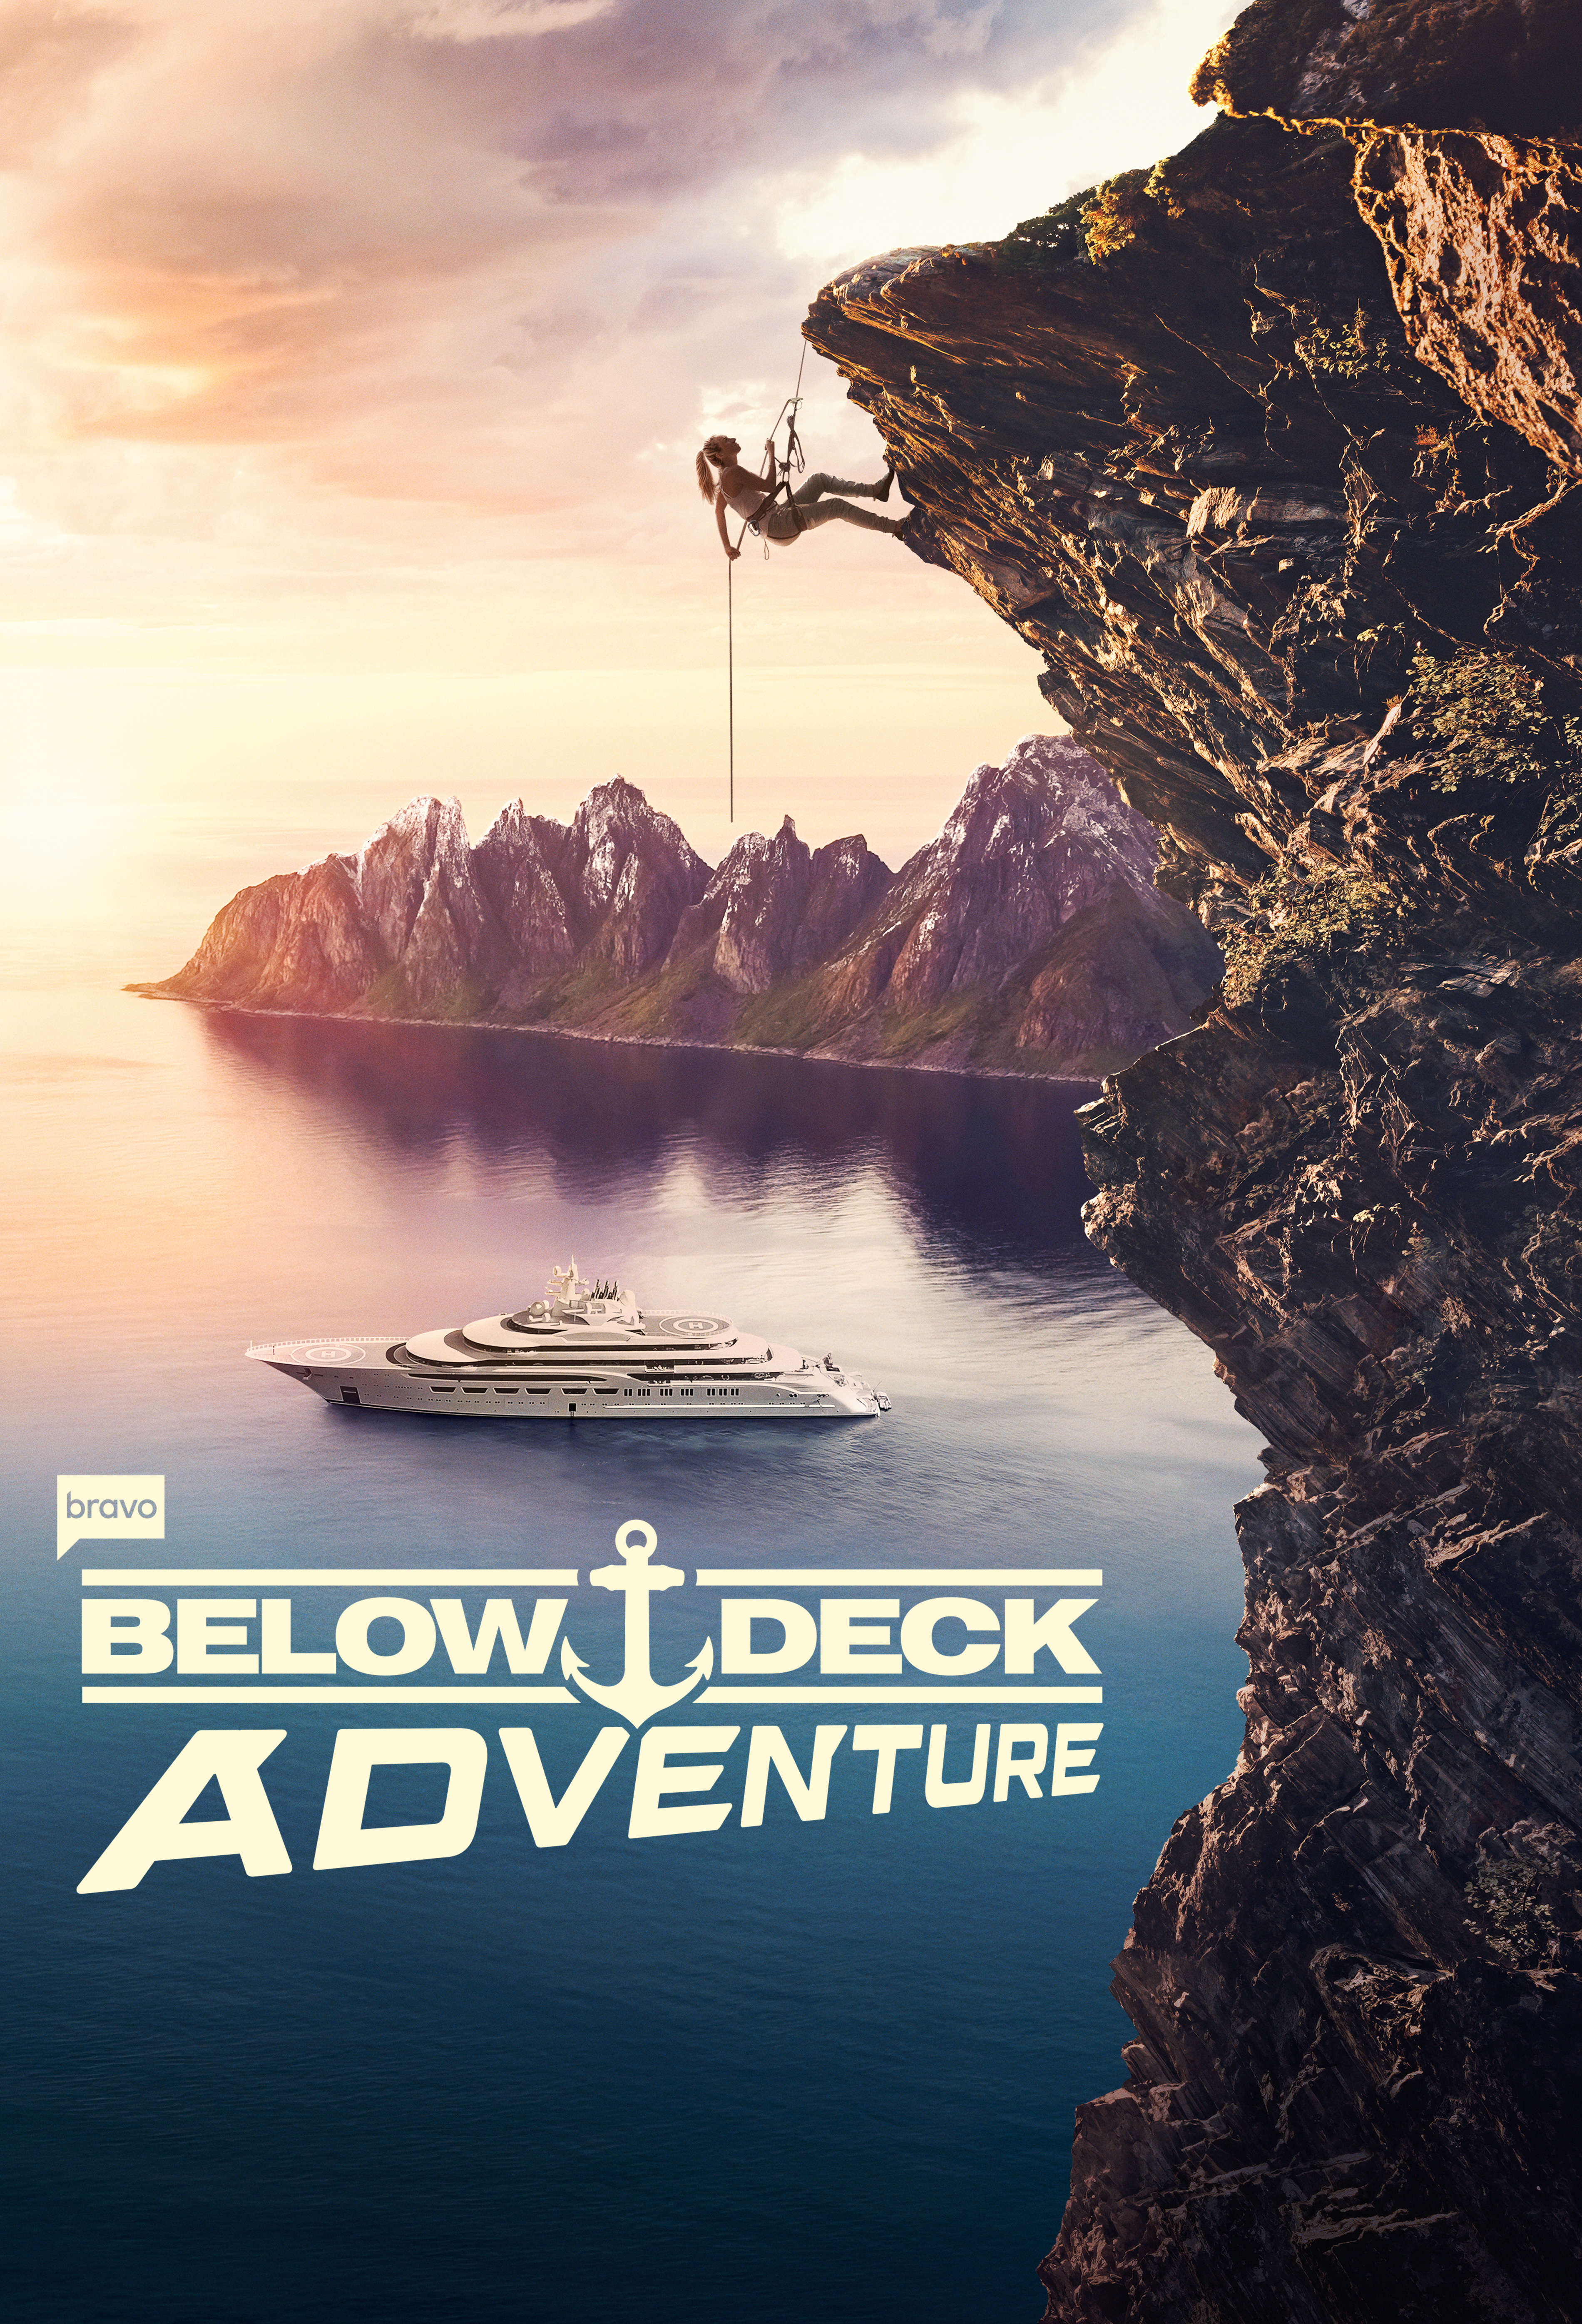 Below Deck Adventure Season 1 Episode 4